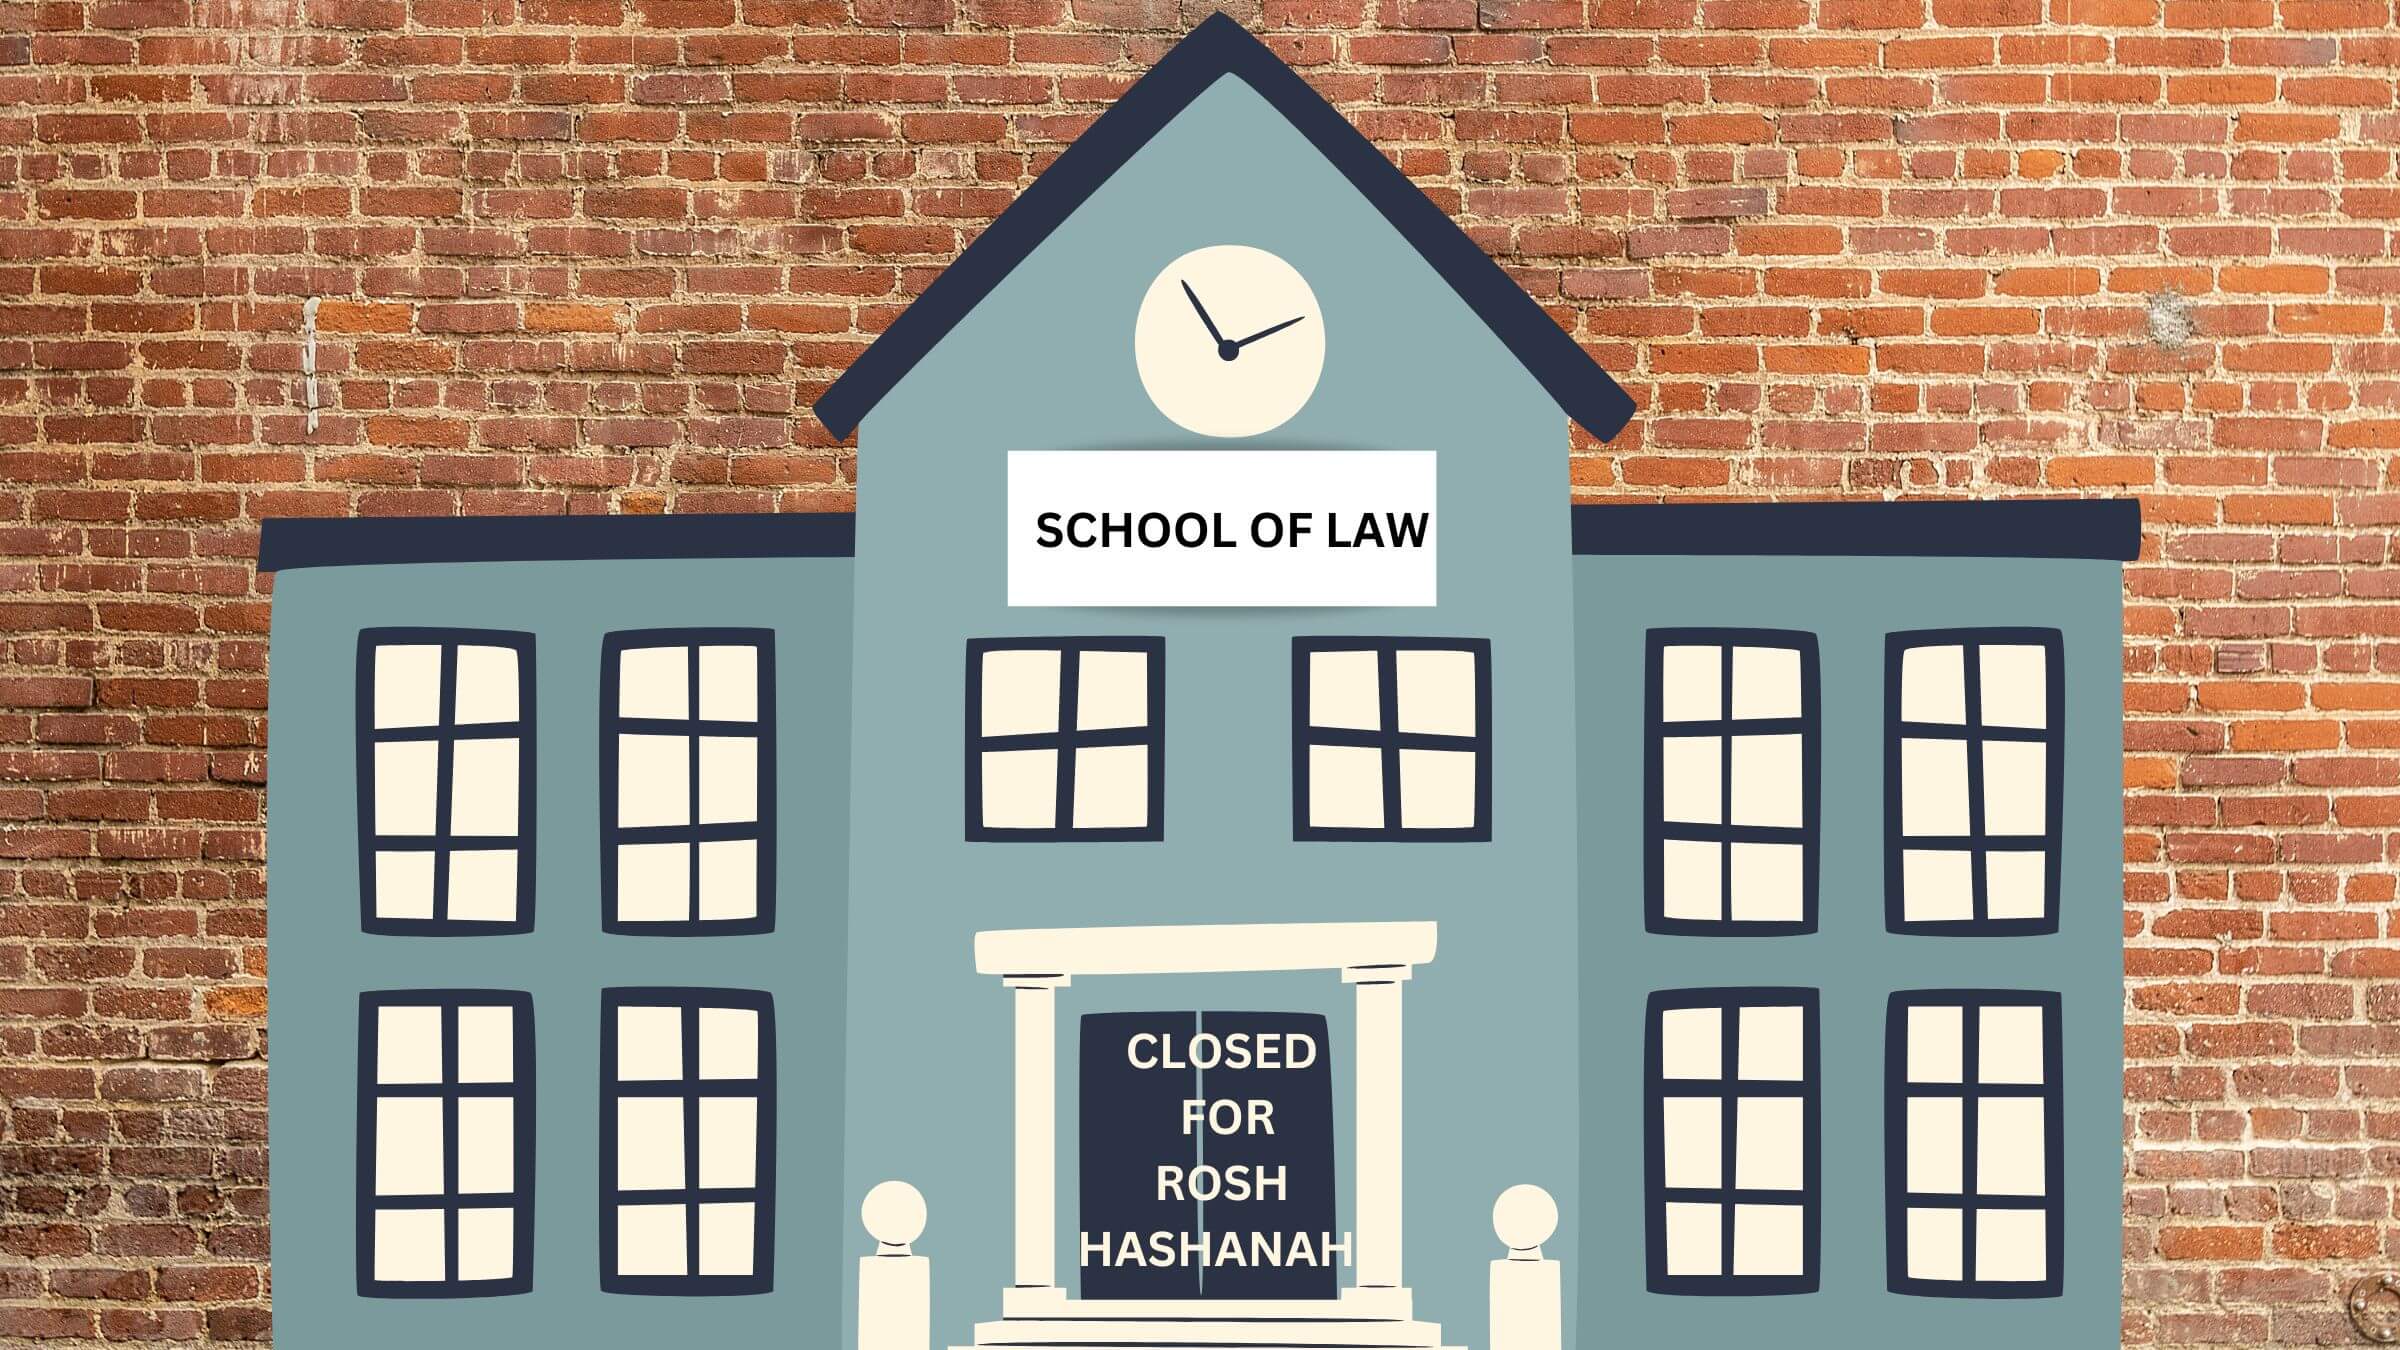 Should a law school professor cancel class on Rosh Hashanah? Alan Dershowitz weighs in.